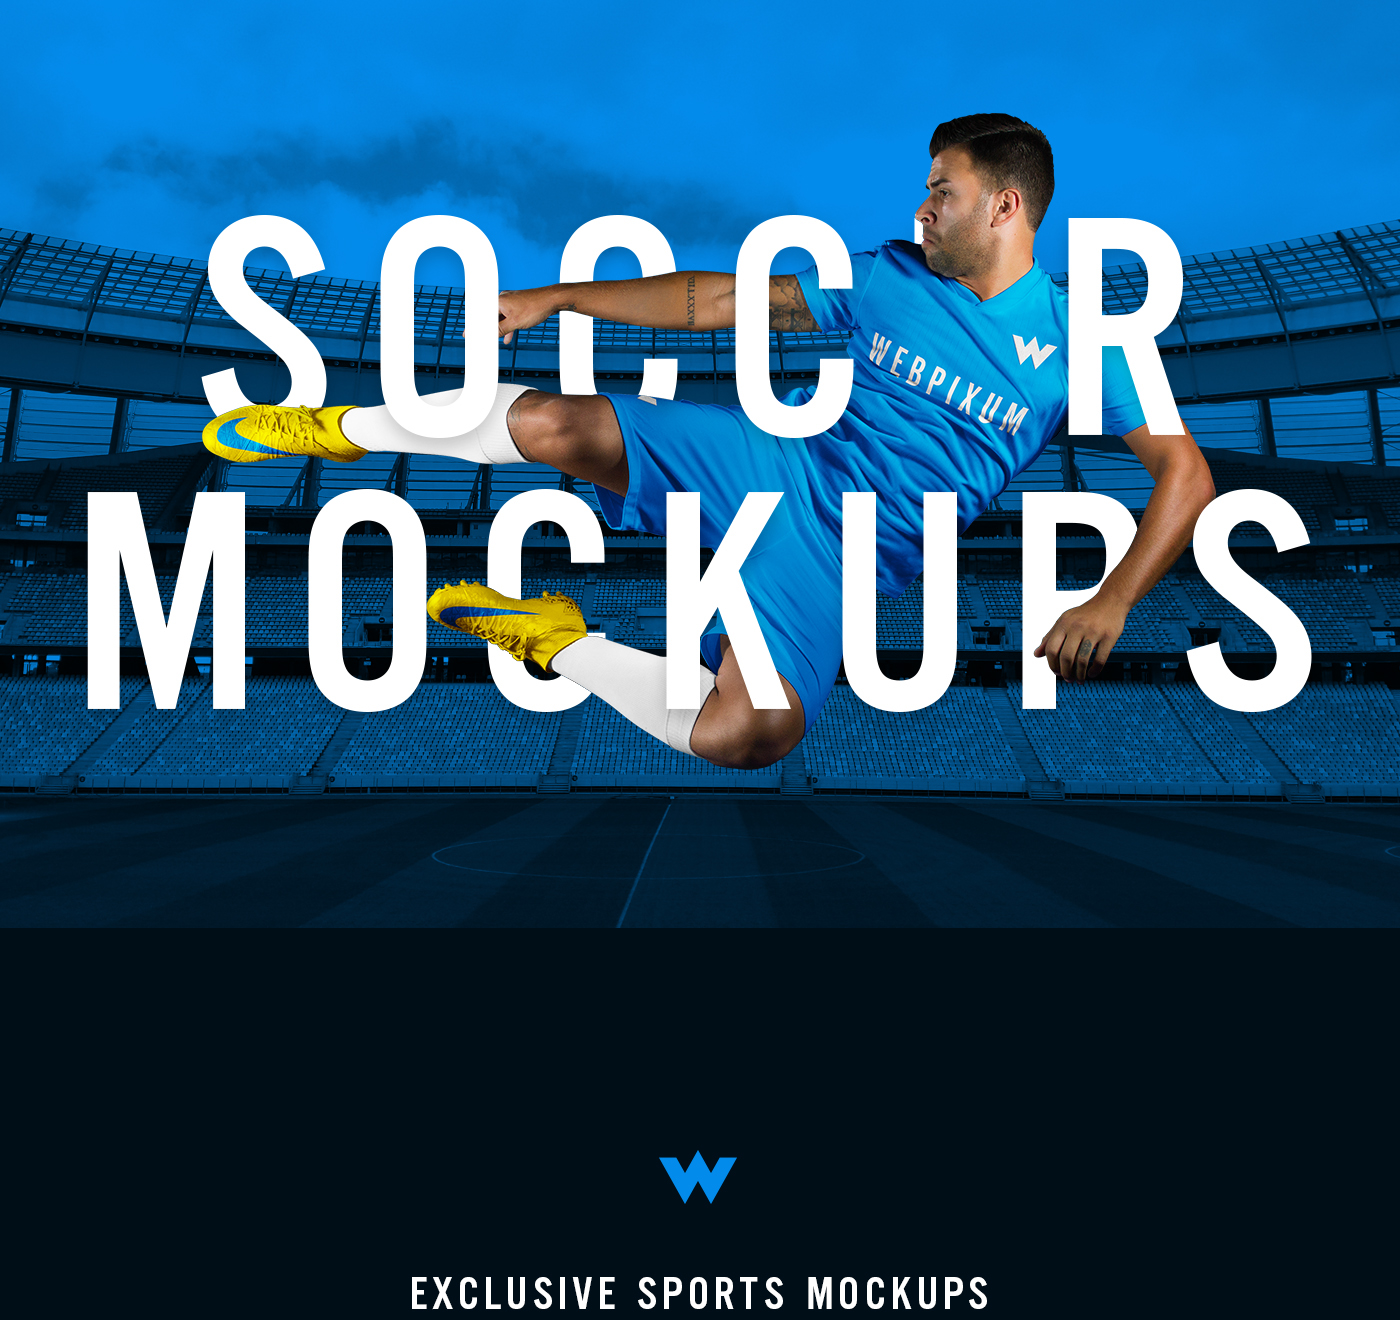 Download MLS Soccer Kit Mockups - FREE PSD on Behance